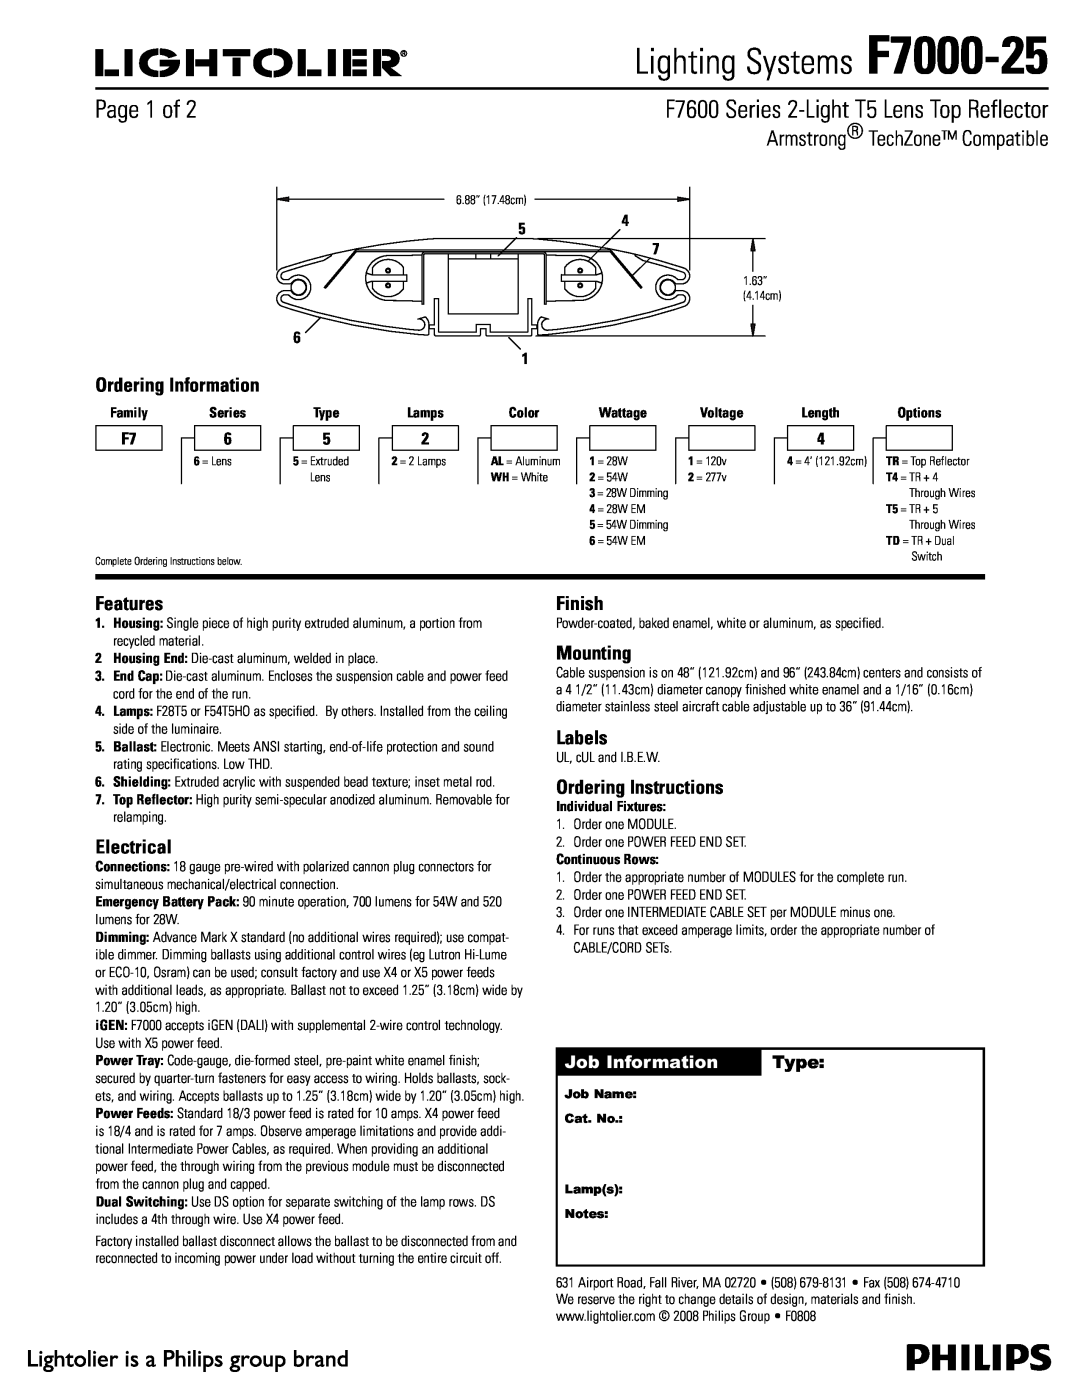 Lightolier specifications Job Information, Type, Lighting Systems F7000-25, 4FSJFT-JHIU5-FOT5PQ3FGMFDUPS 